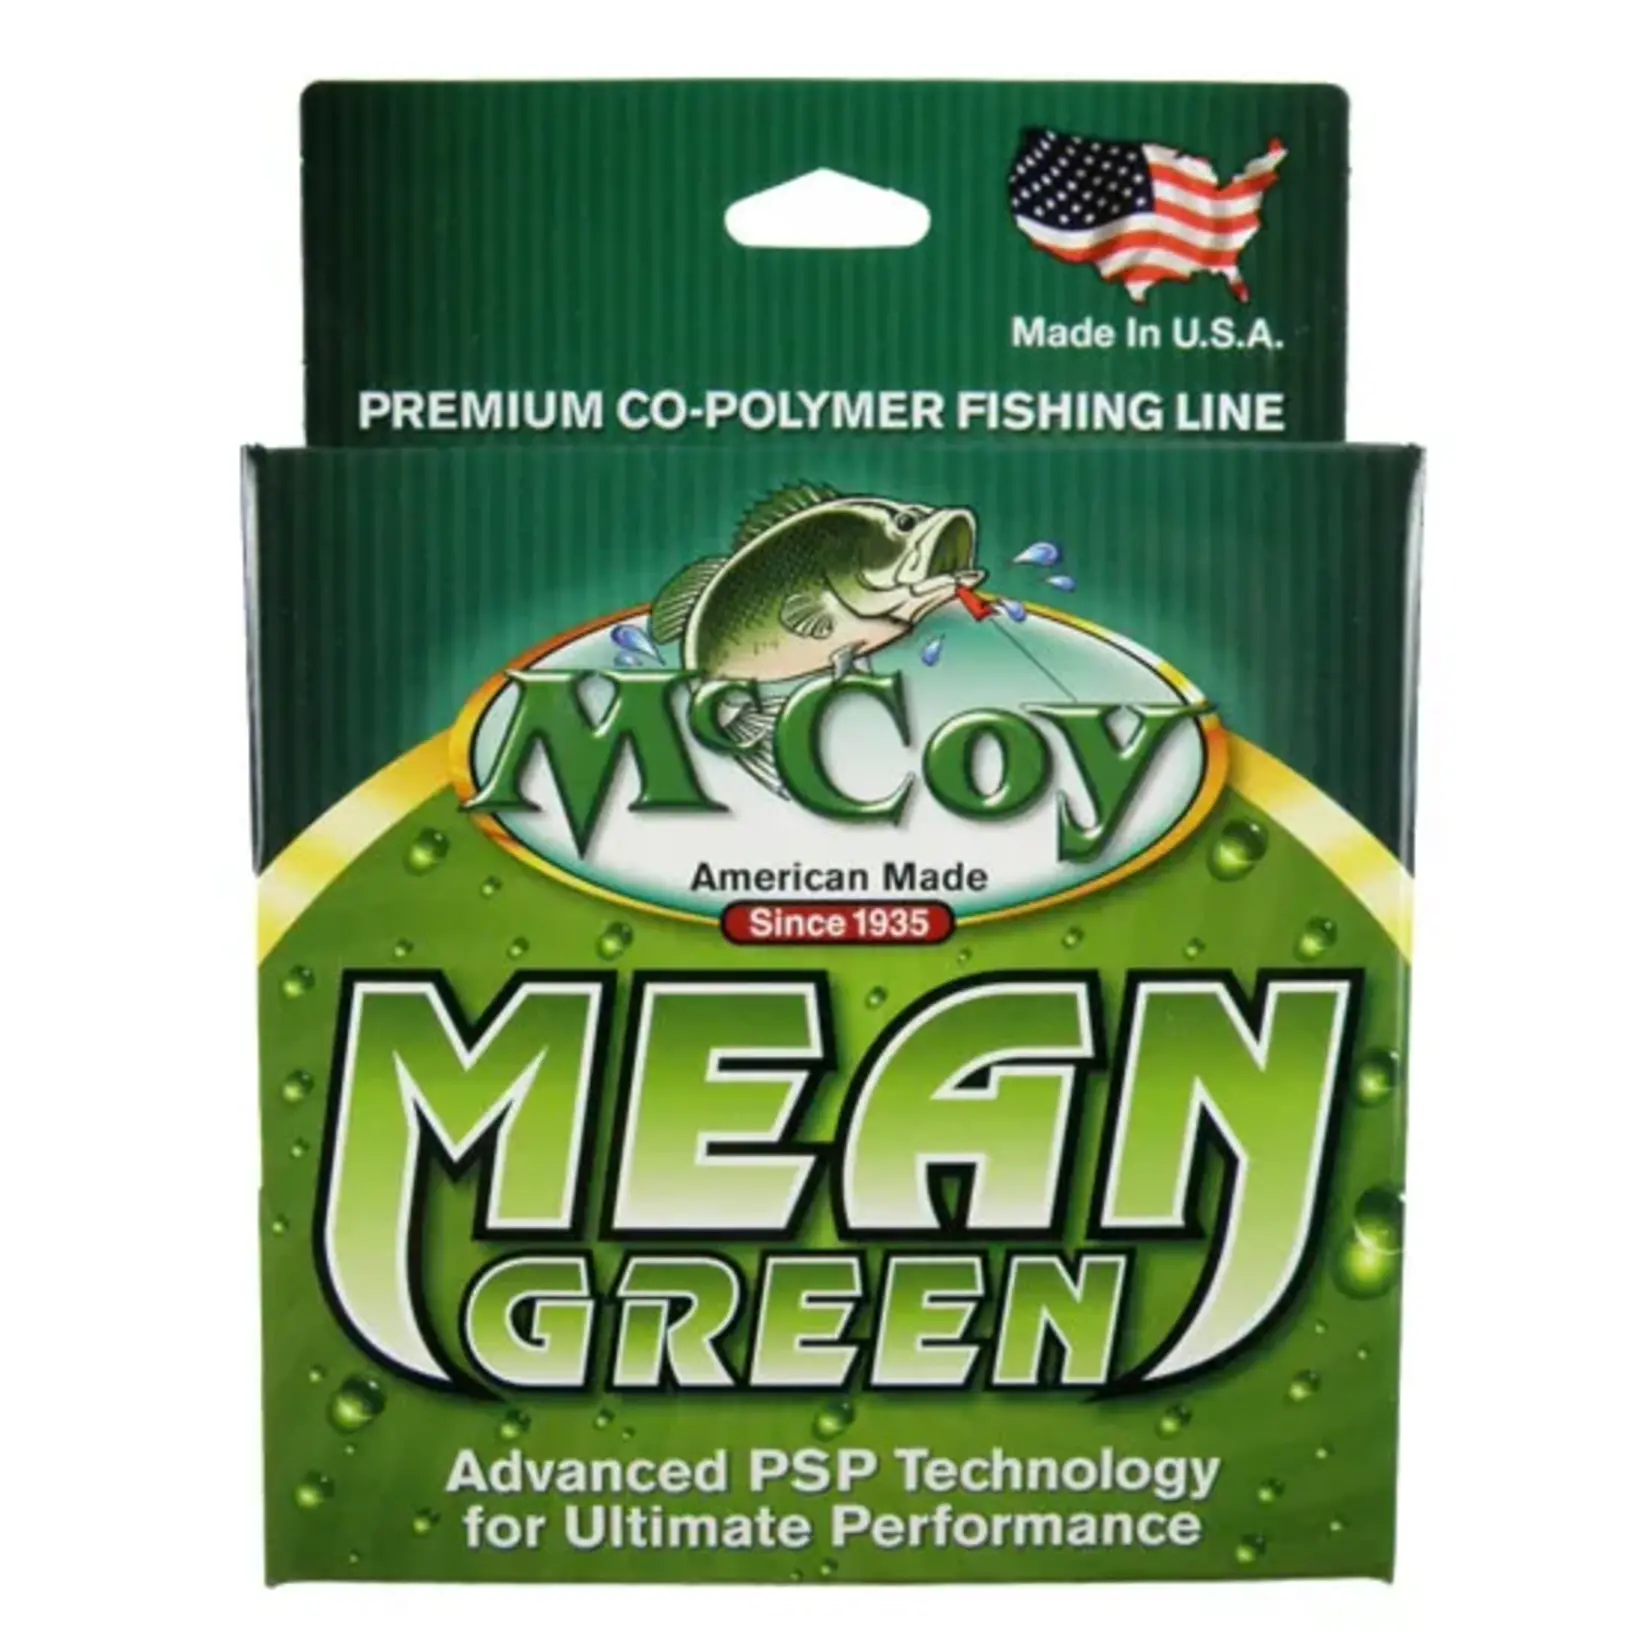 mc coy MCCOY MEAN GREEN